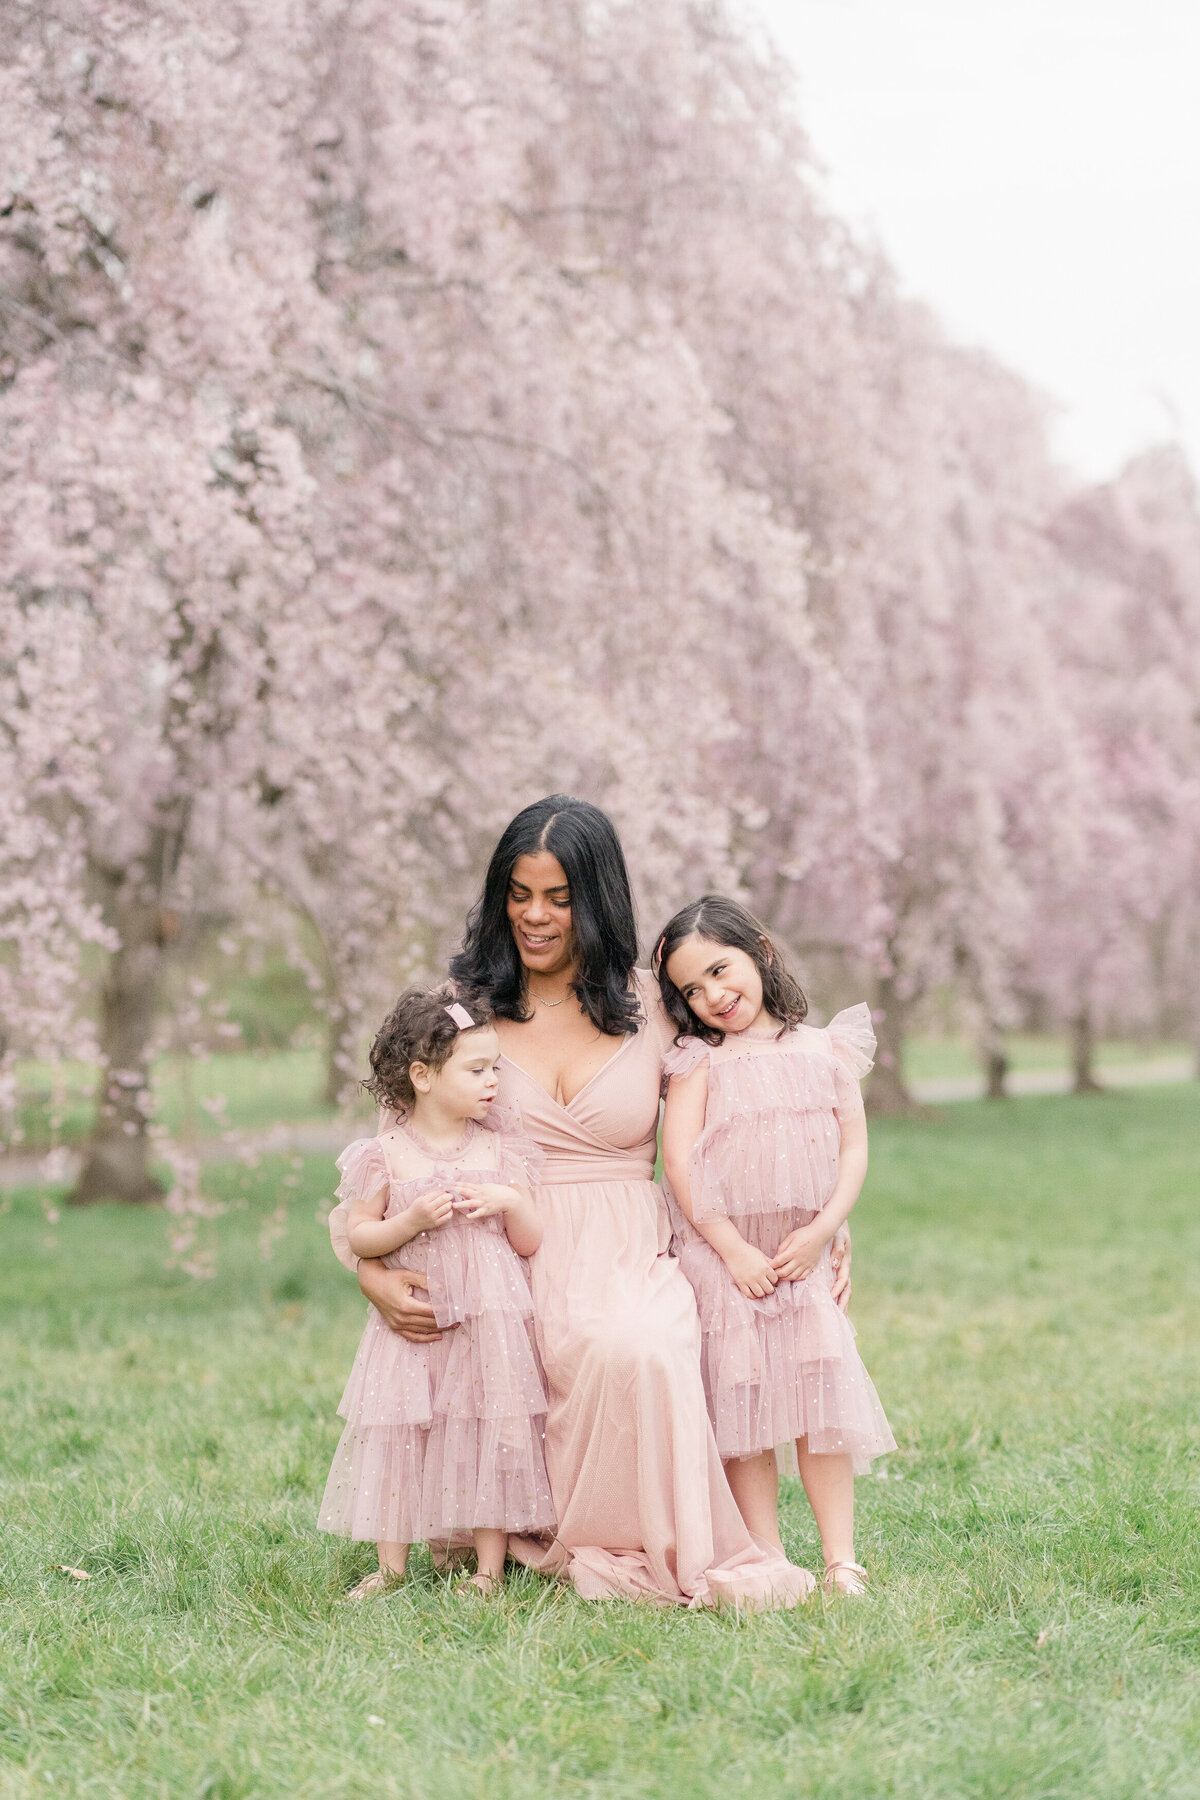 Courtney-Landrum-Photography-Motherhood-Cherry-Blossoms-33